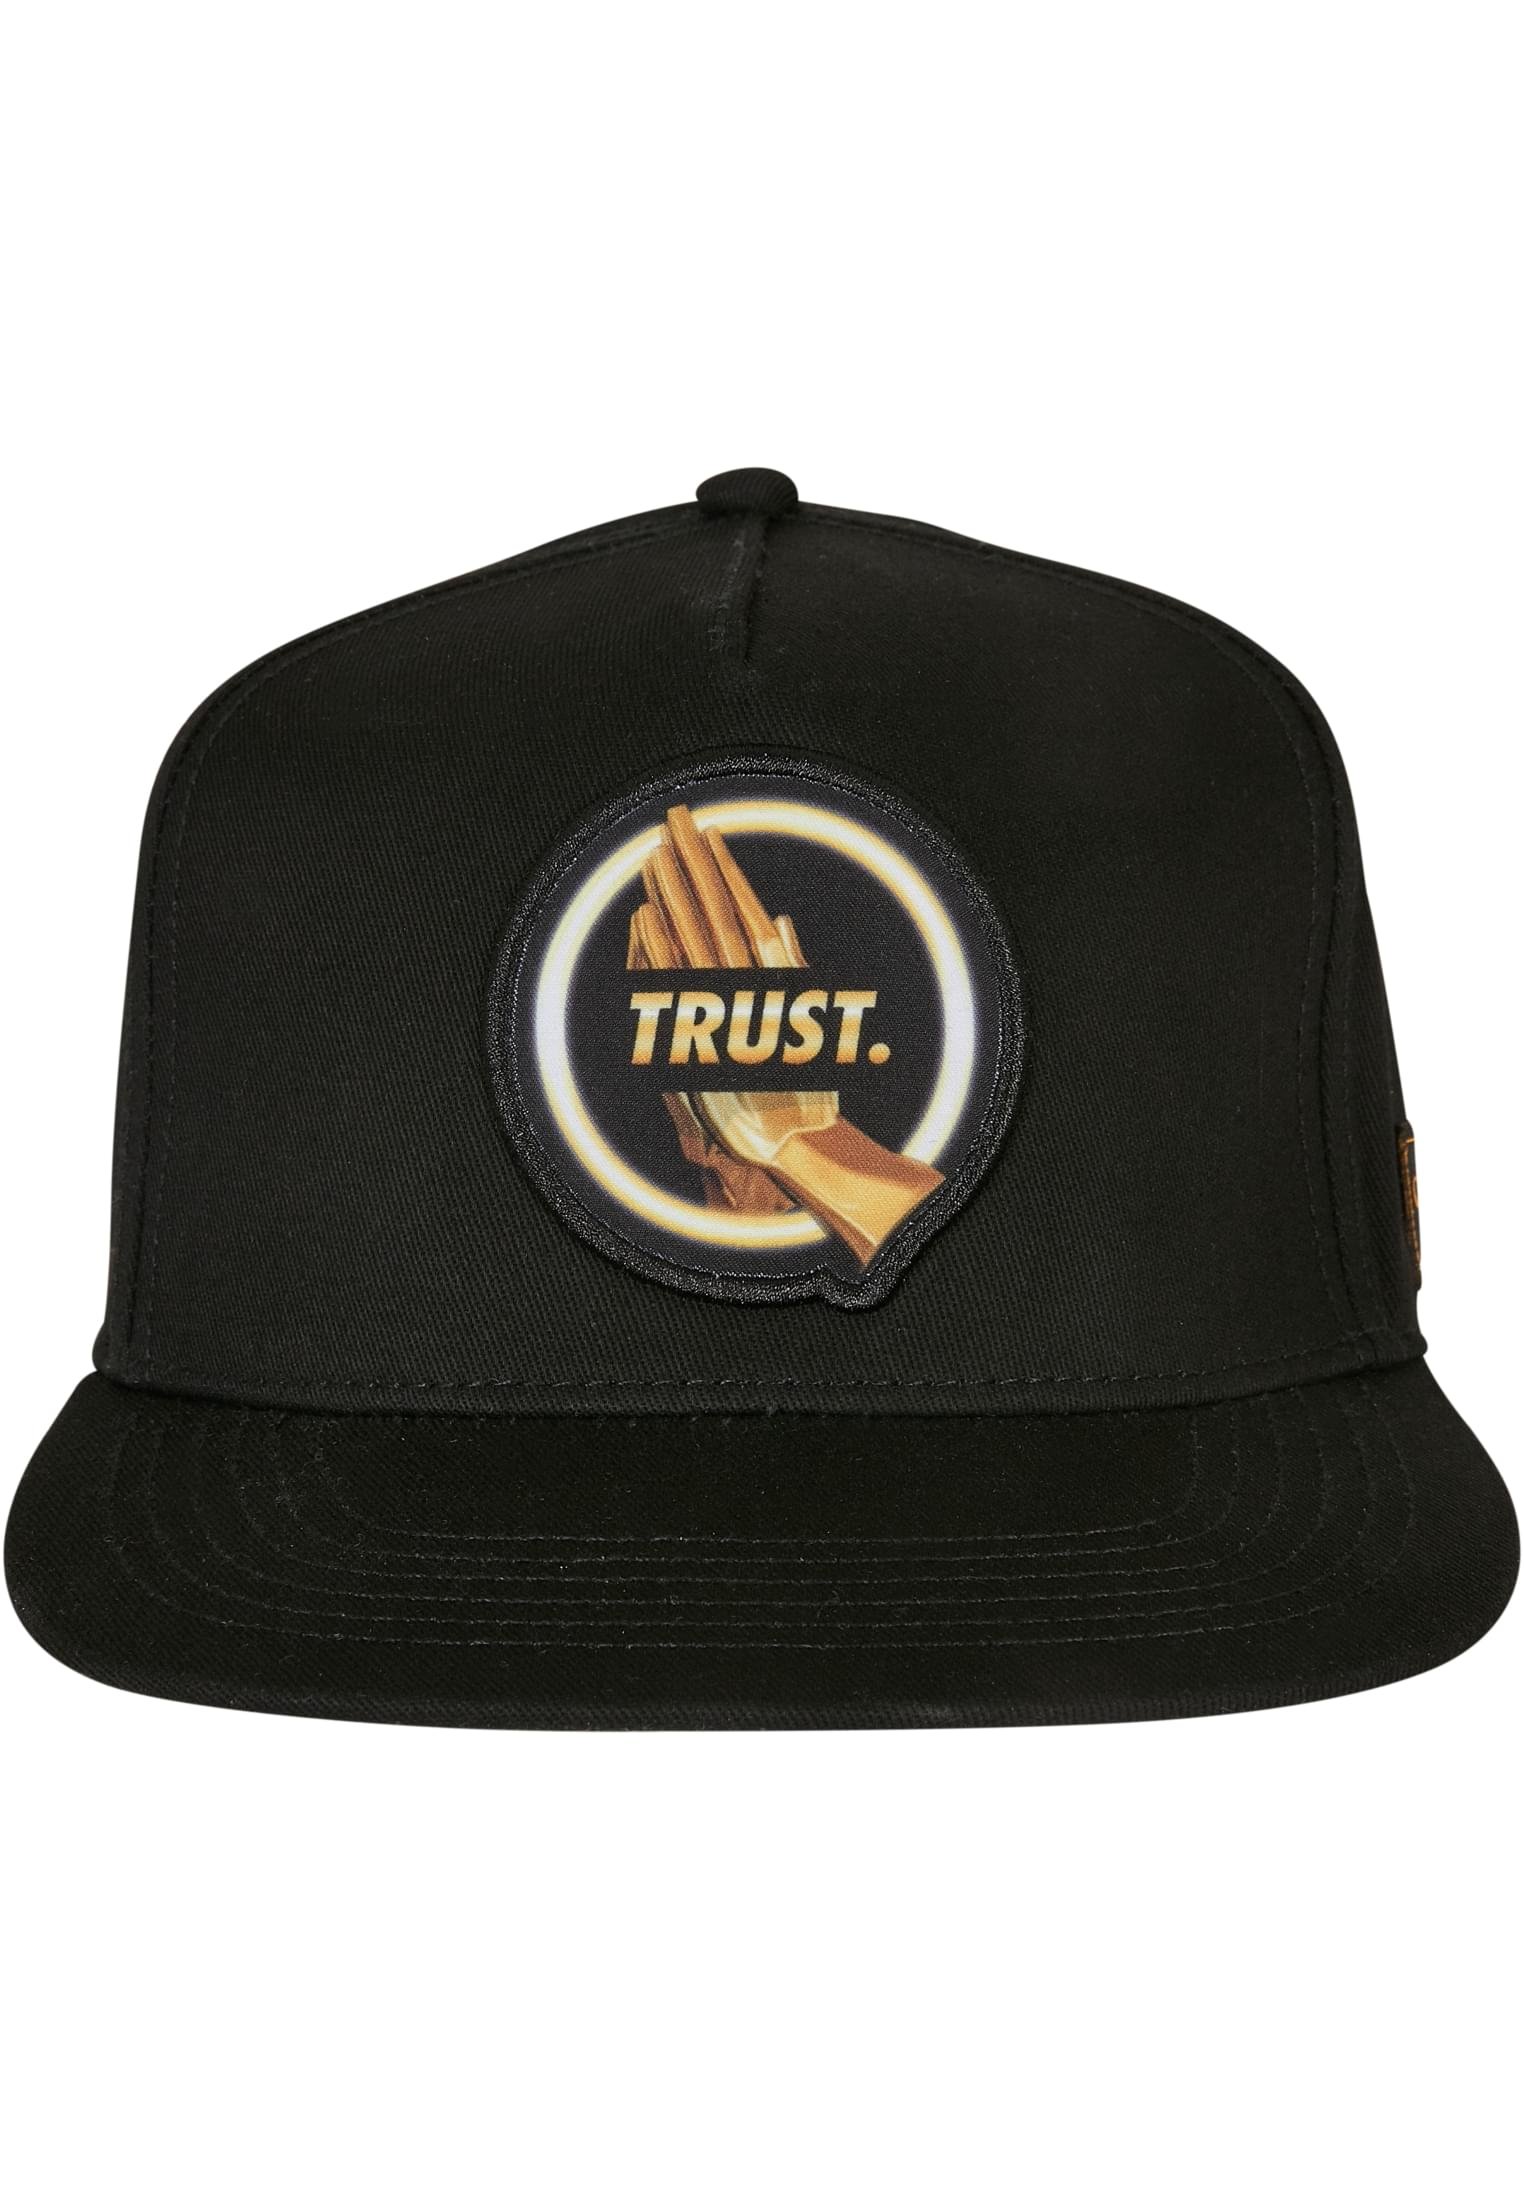 Trust in Gold Cap black/gold one size